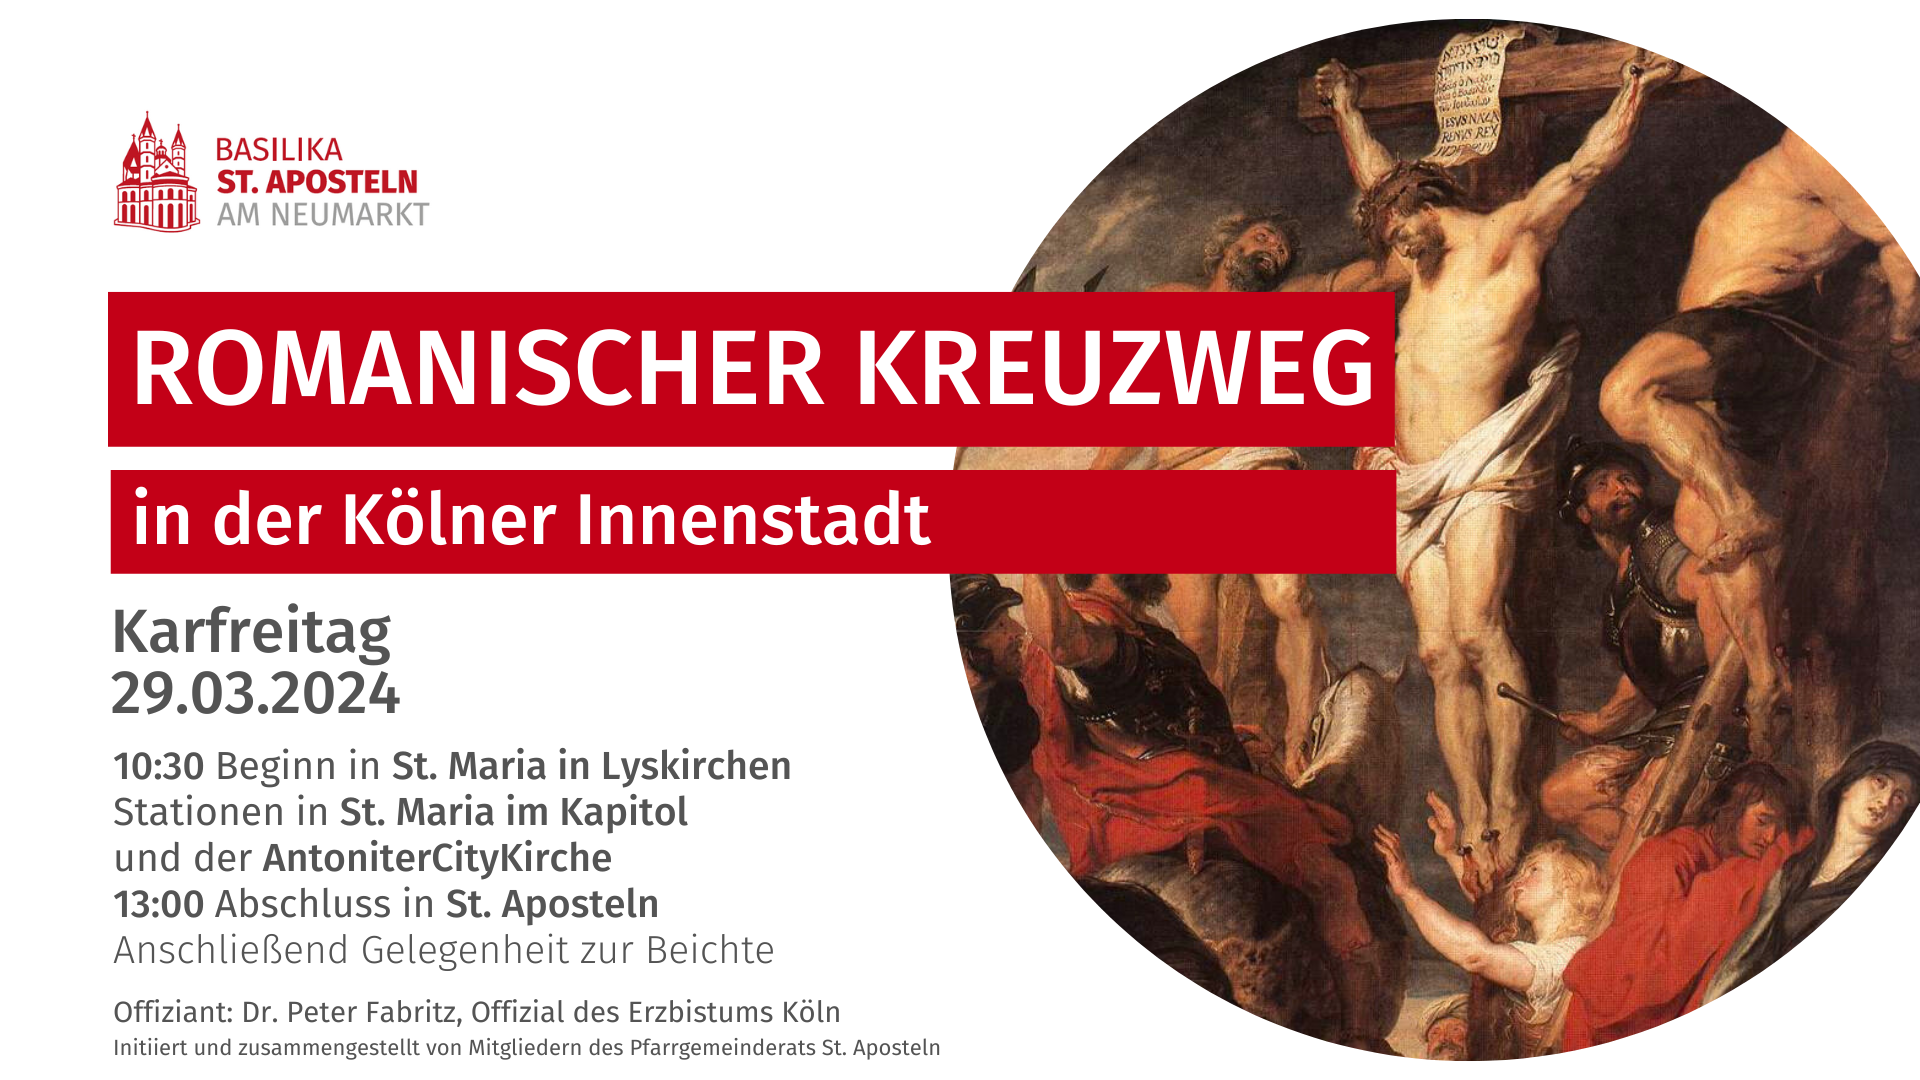 Header Facebook event Kreuzweg St Aposteln 2024 (1920 x 1080 px)